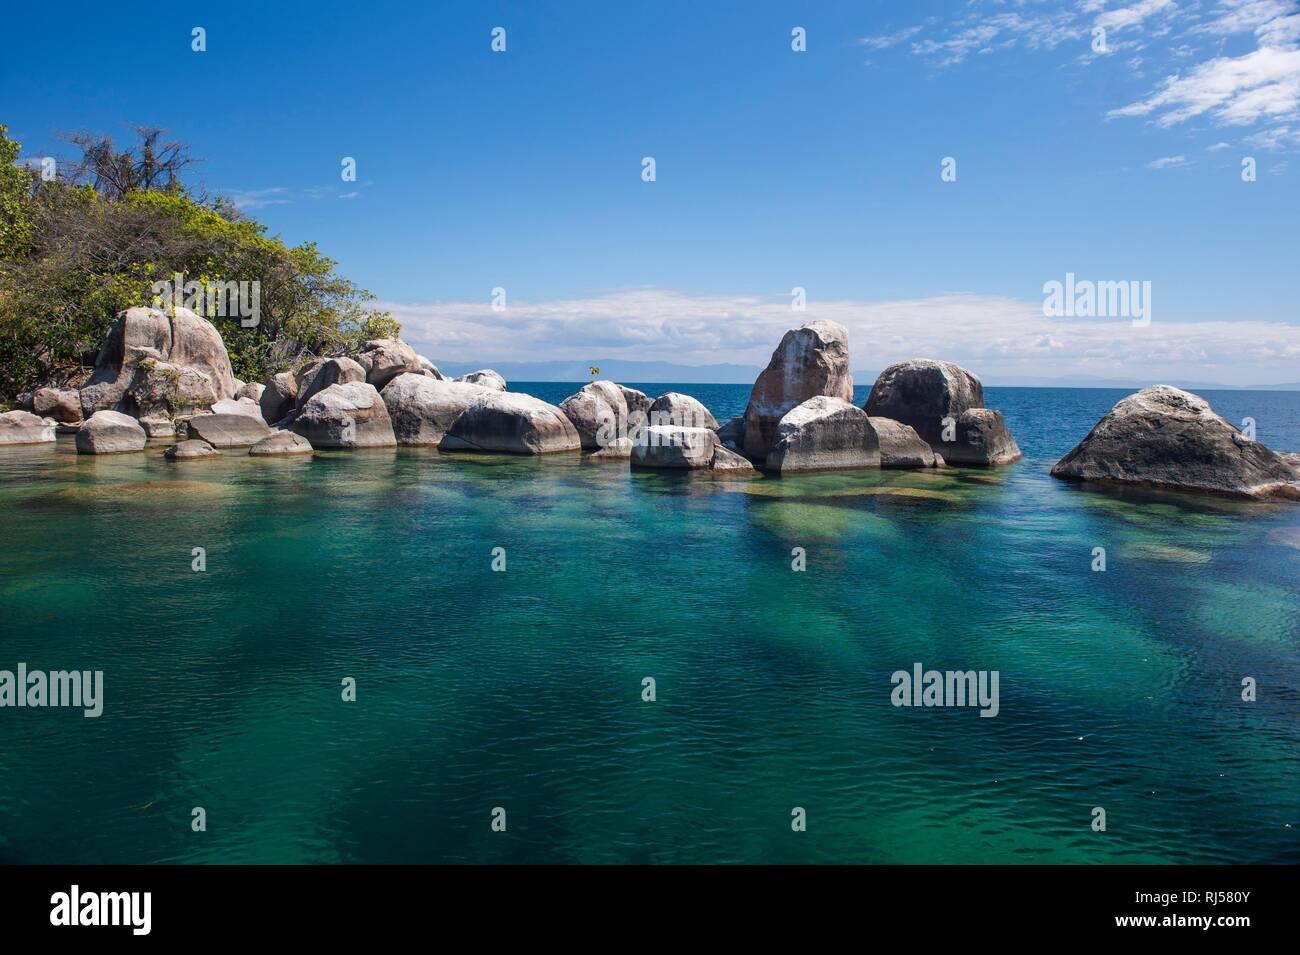 Turquoise clear water and granite rocks, Mumbo island, Cape Maclear, Lake Malawi, Malawi Stock Photo